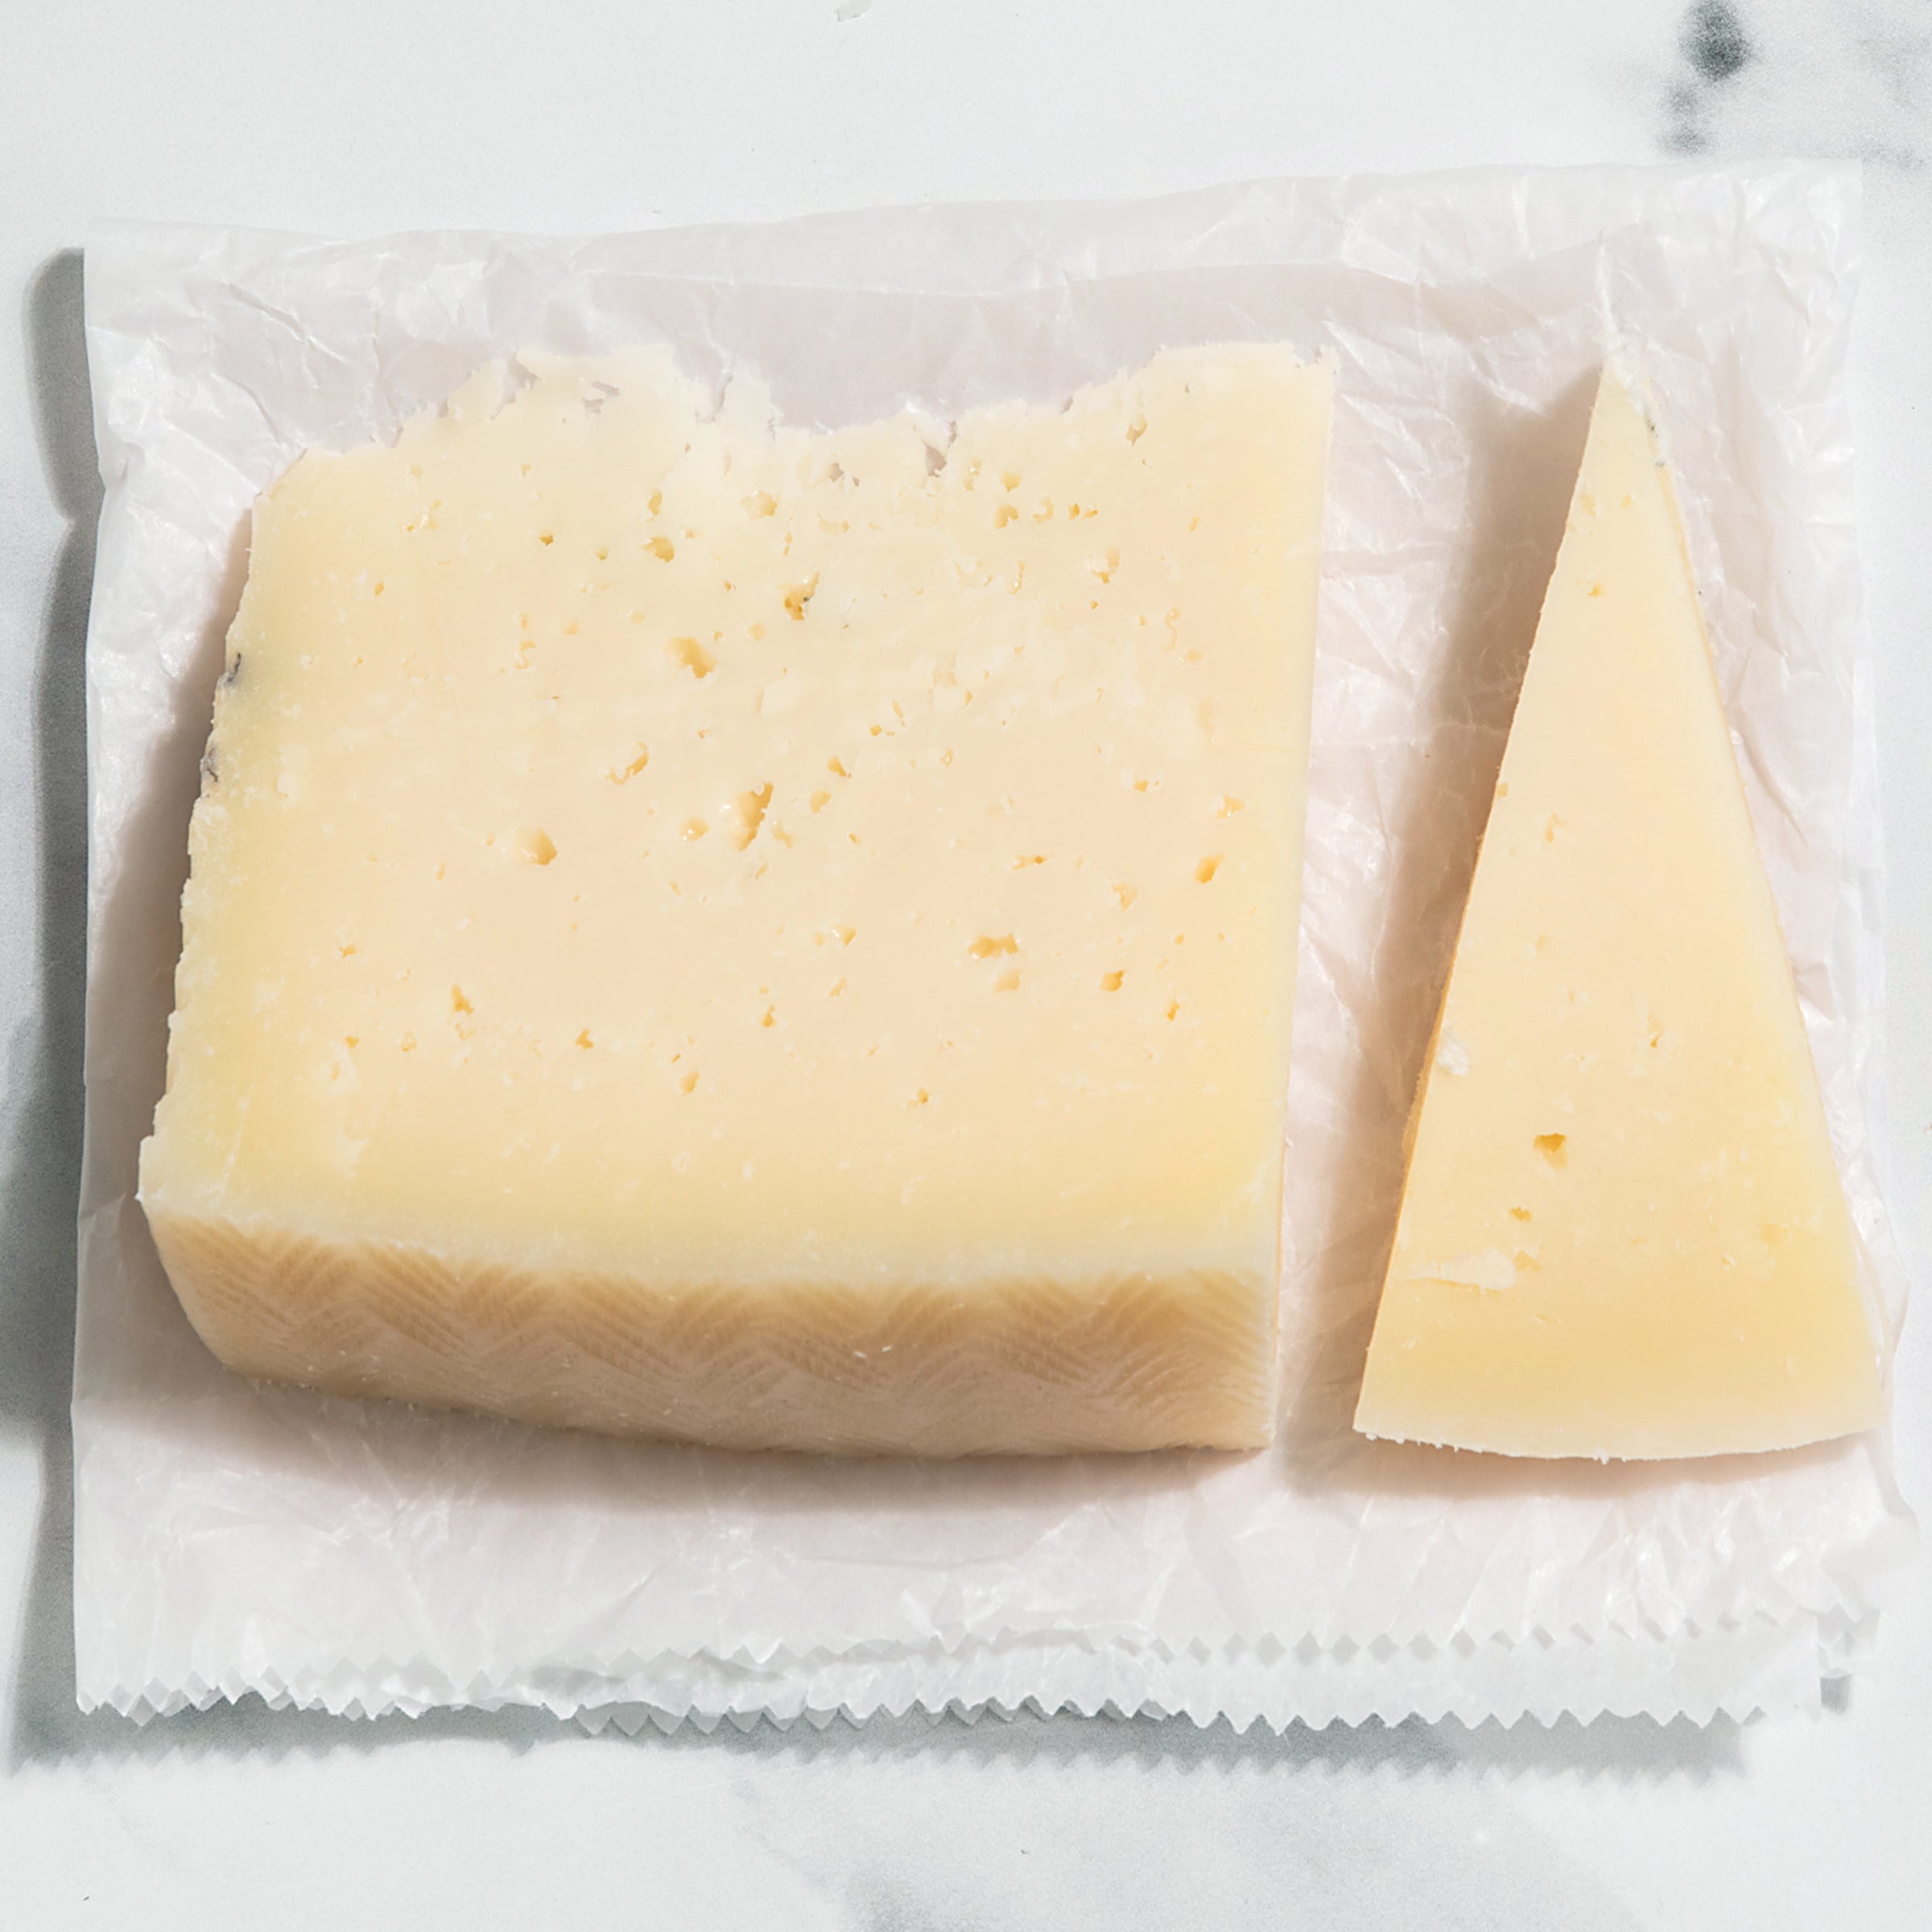 igourmet_8770_Artisan Raw Milk Manchego DOP Cheese Aged 4 Mo_Mitica_Cheese